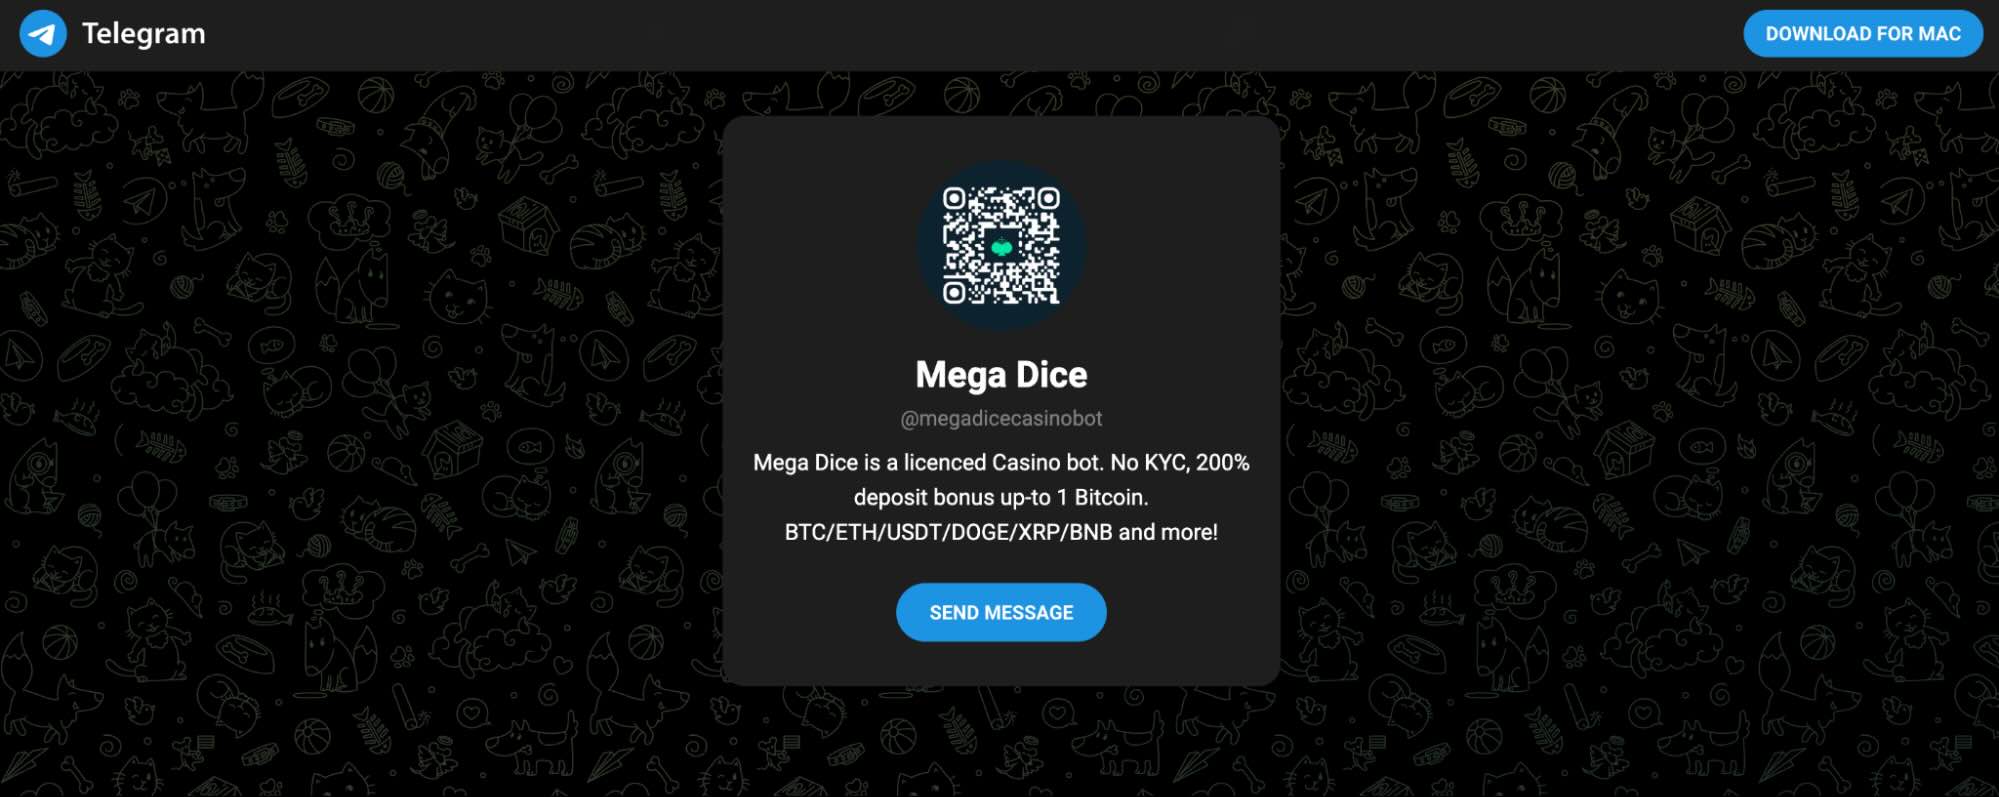 MegaDice Telegram login page - the best 2023 Telegram betting channels